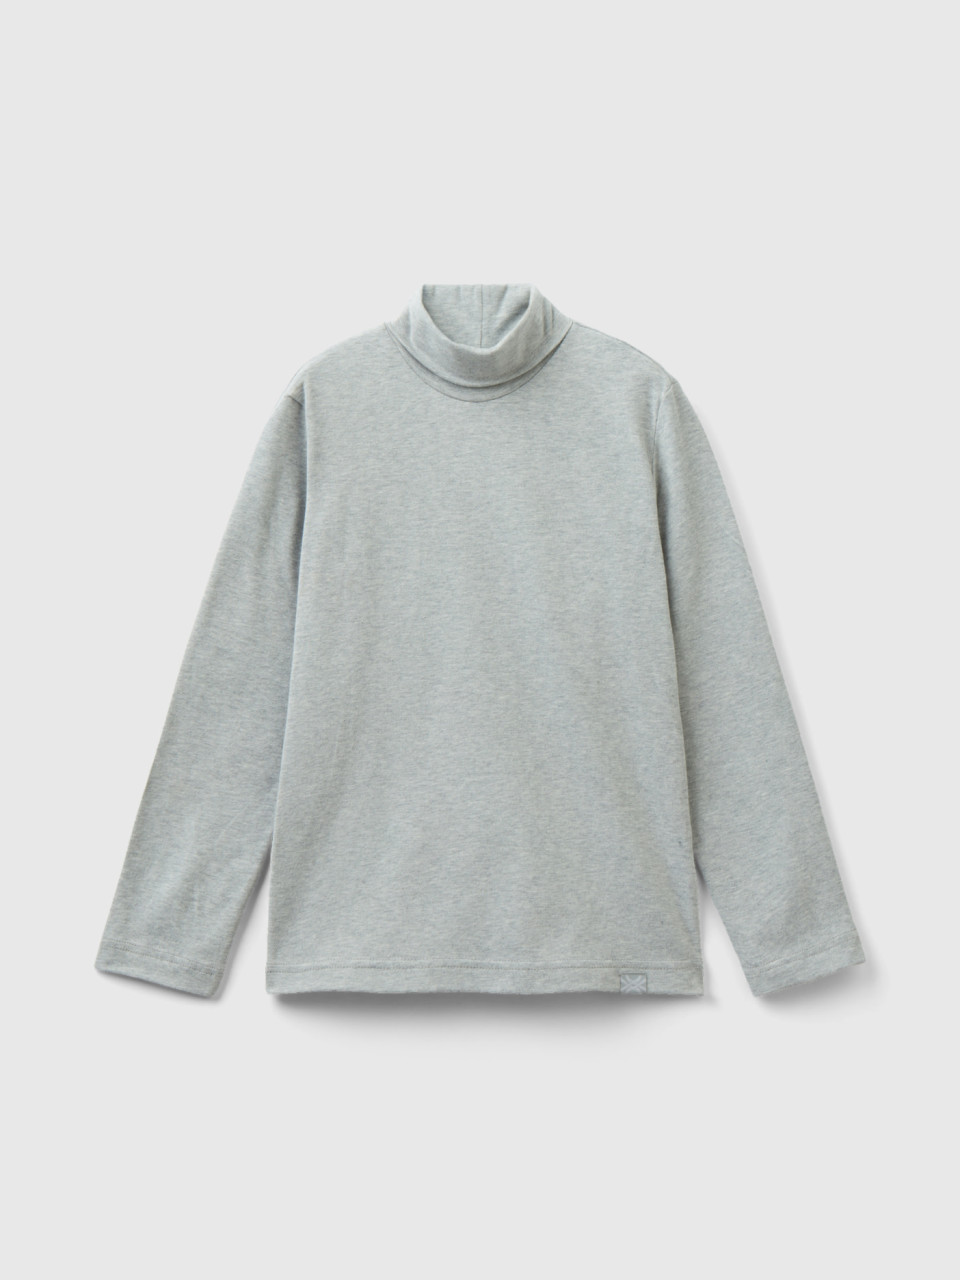 Benetton, Long Sleeve Turtleneck T-shirt, Light Gray, Kids